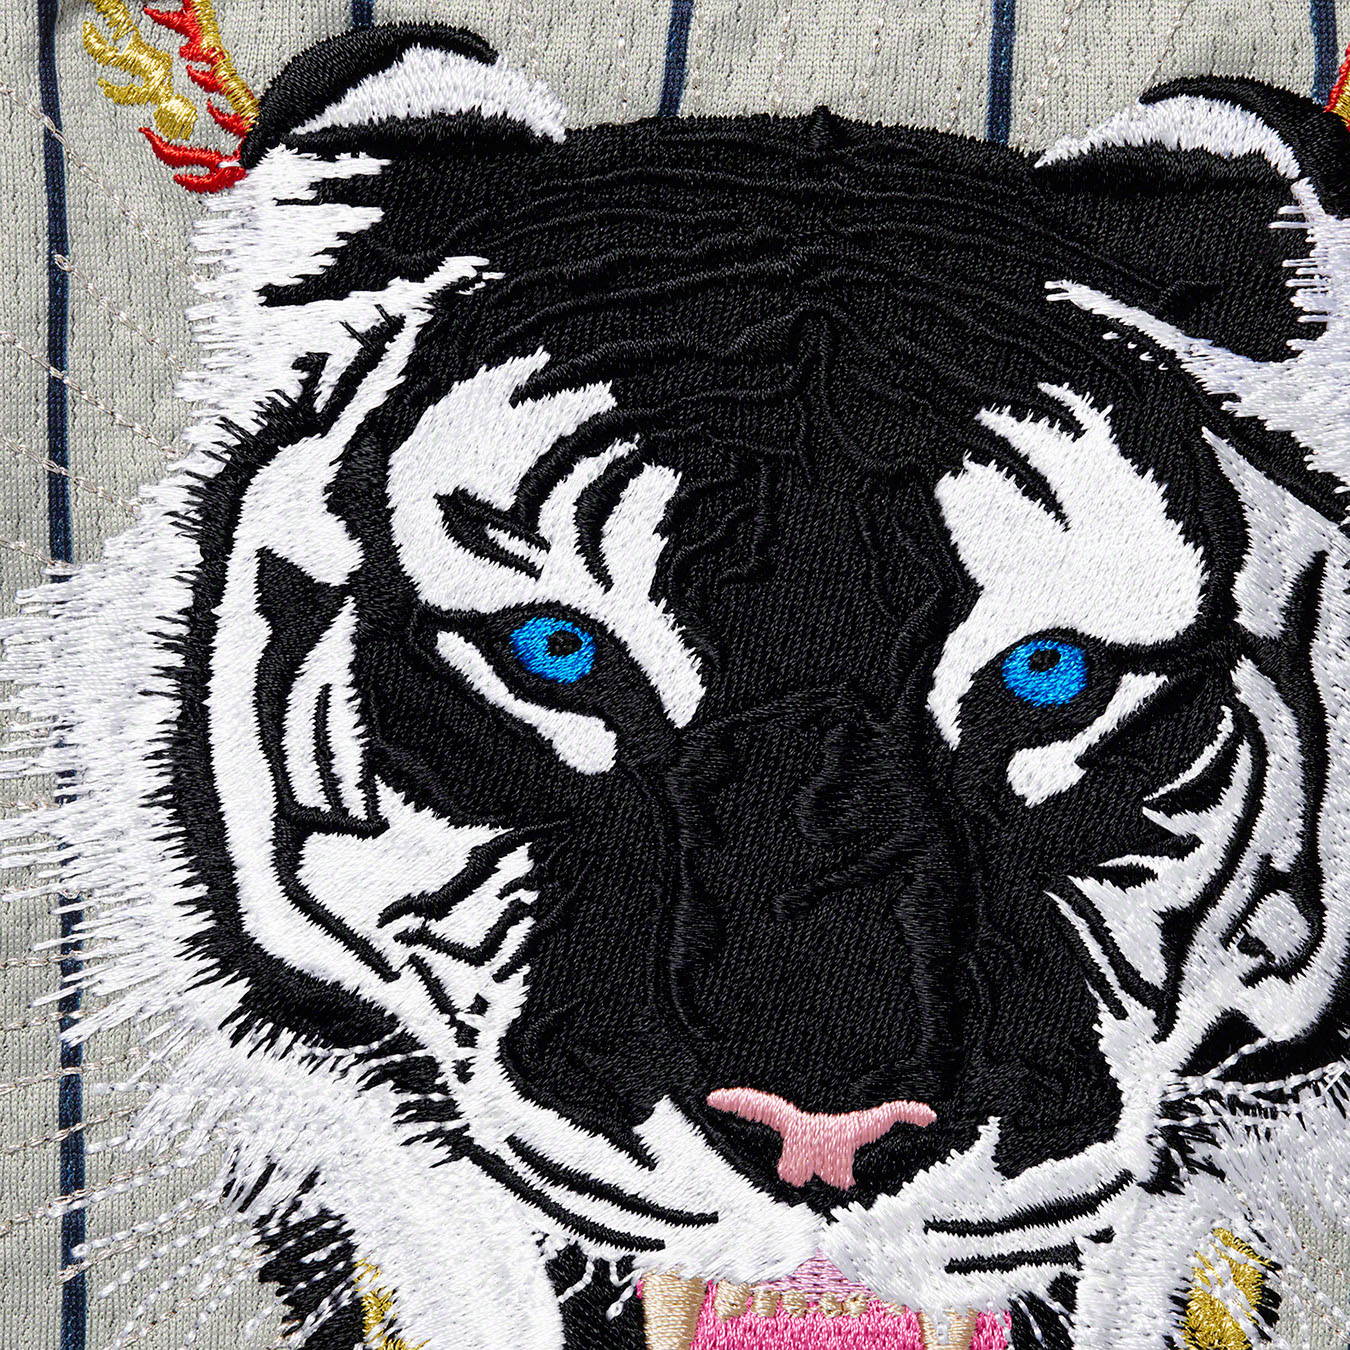 Supreme Tiger Embroidered Baseball Jersey